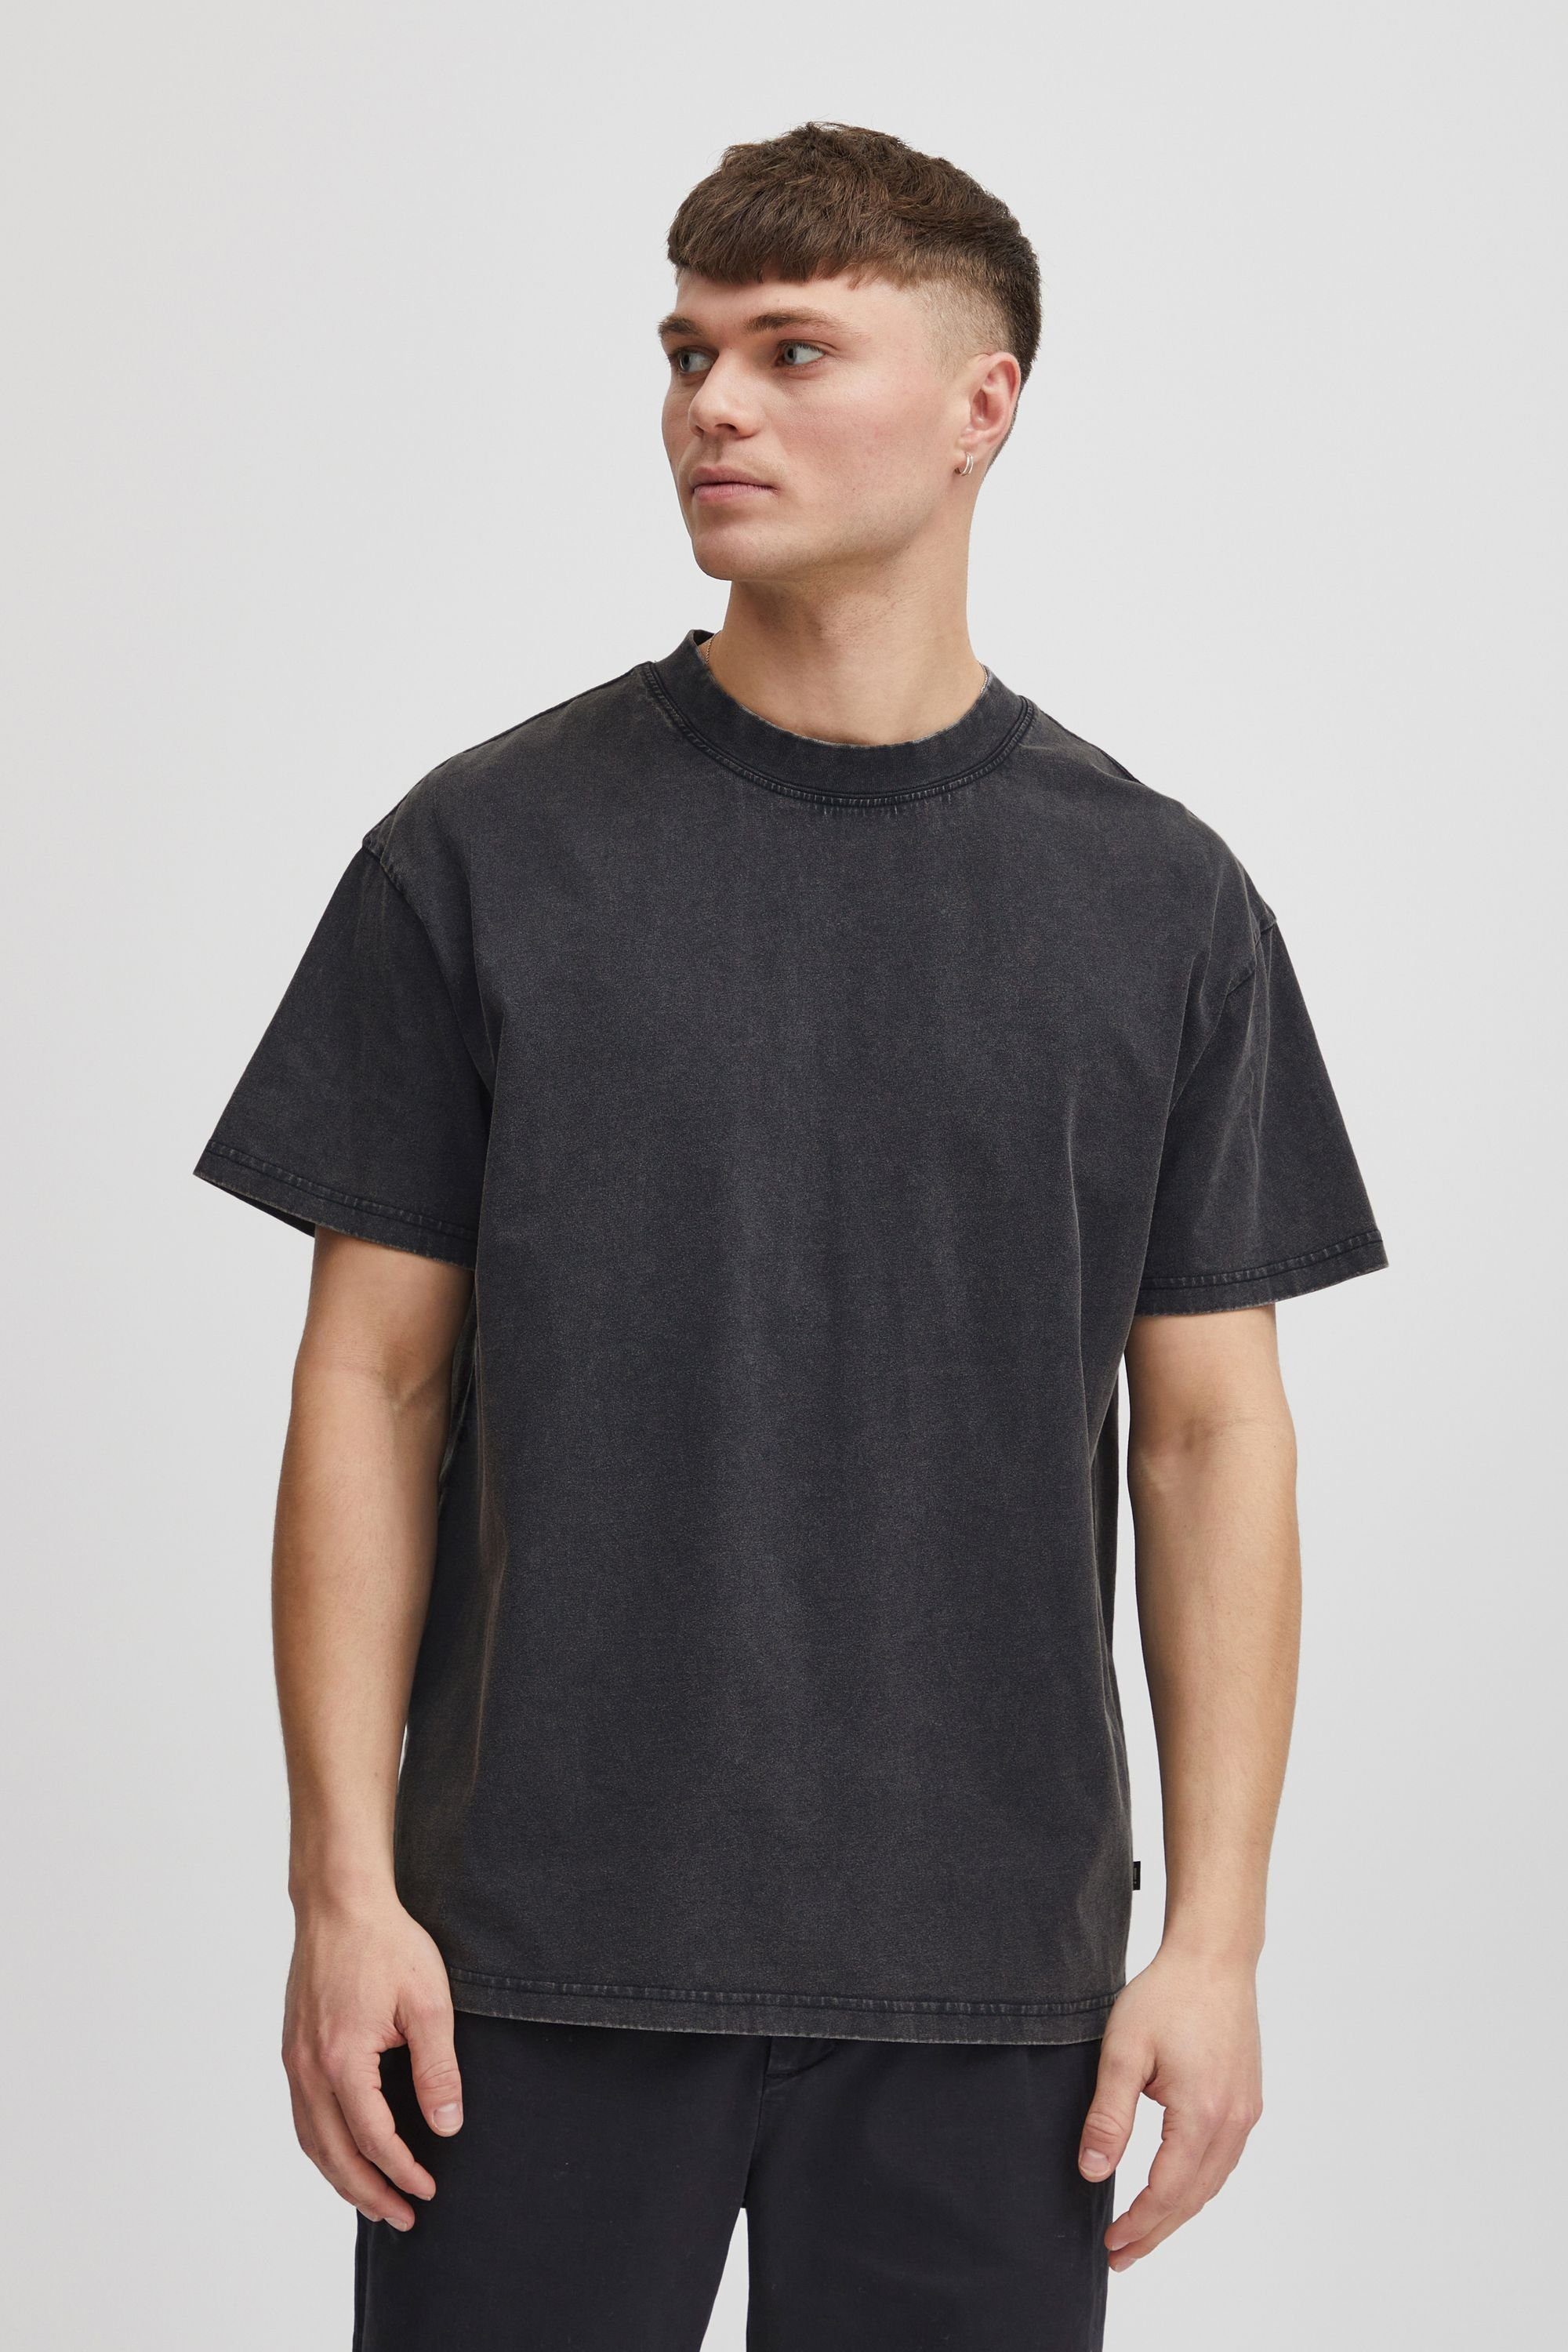 (194008) - 21107878 T-Shirt True !Solid SDGerlak Black